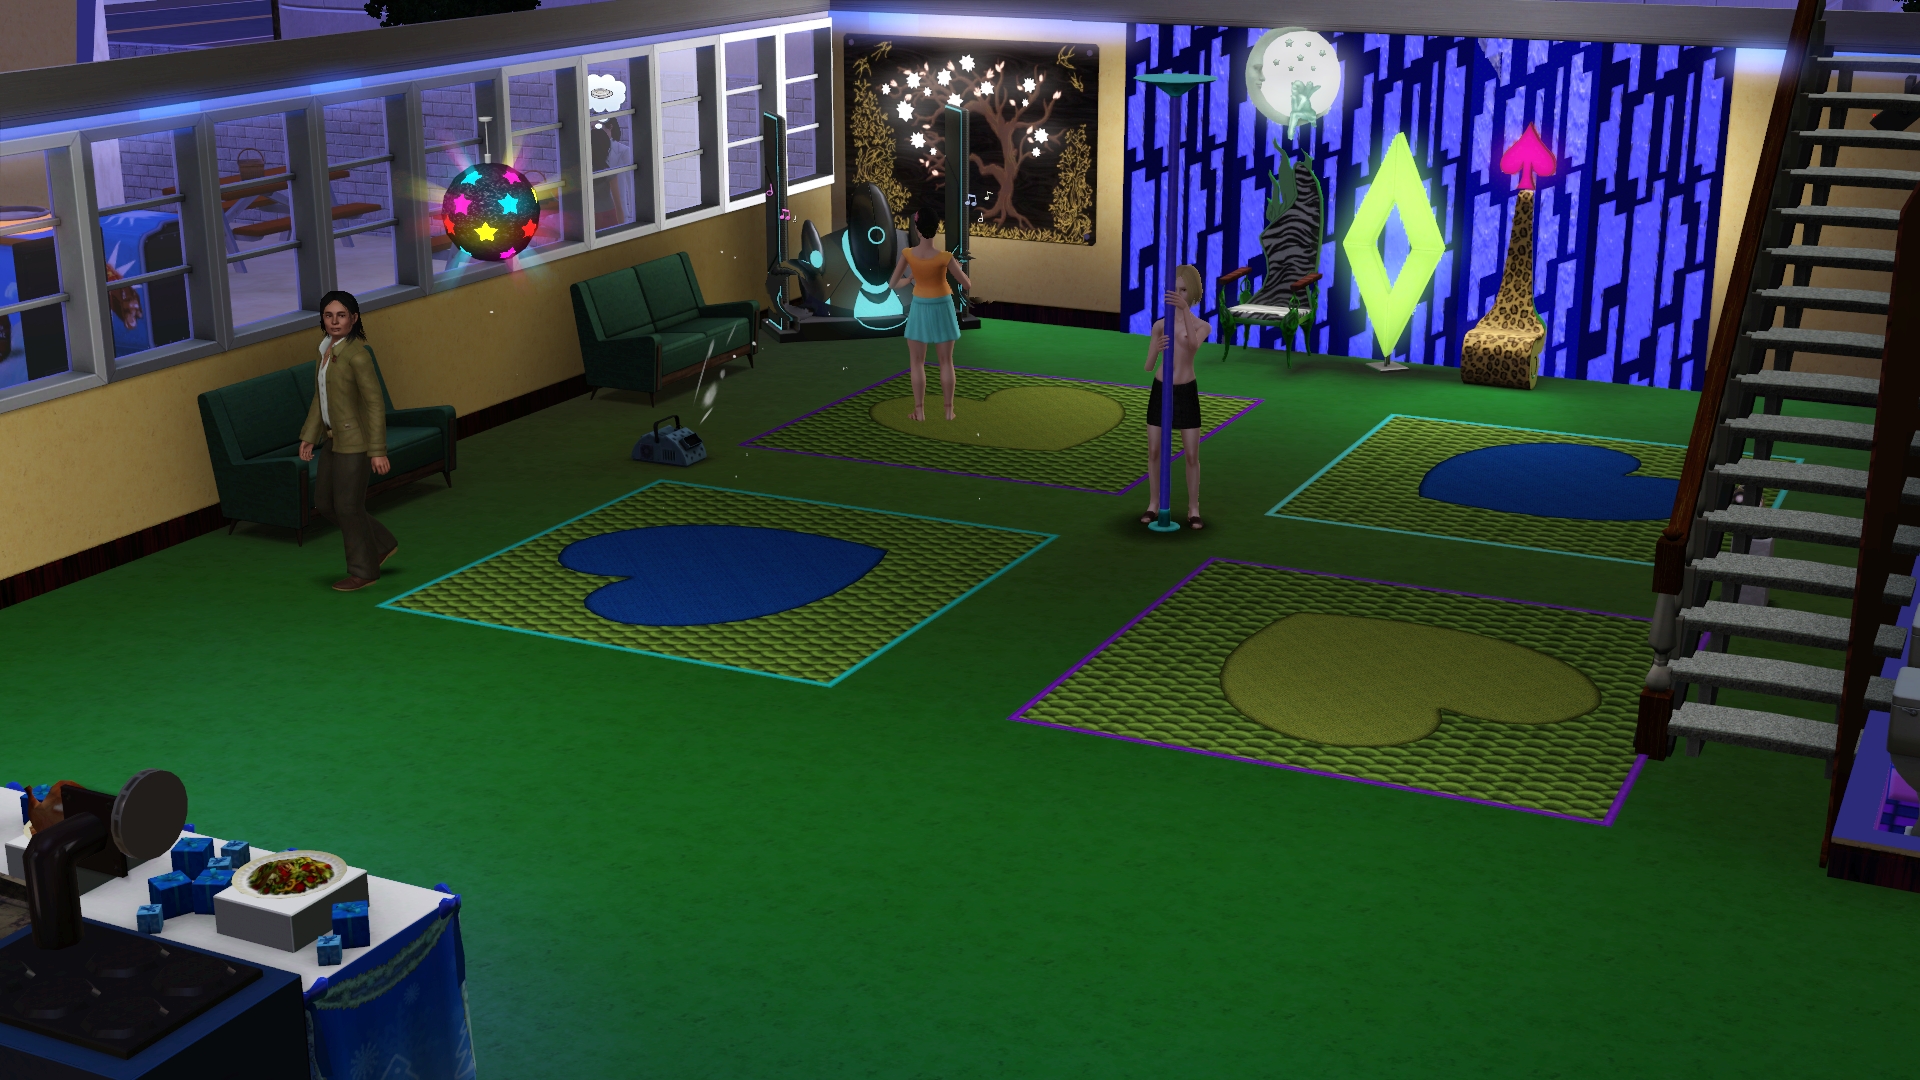 Deviluke Academy For Sims 3 The Sims 3 Loverslab